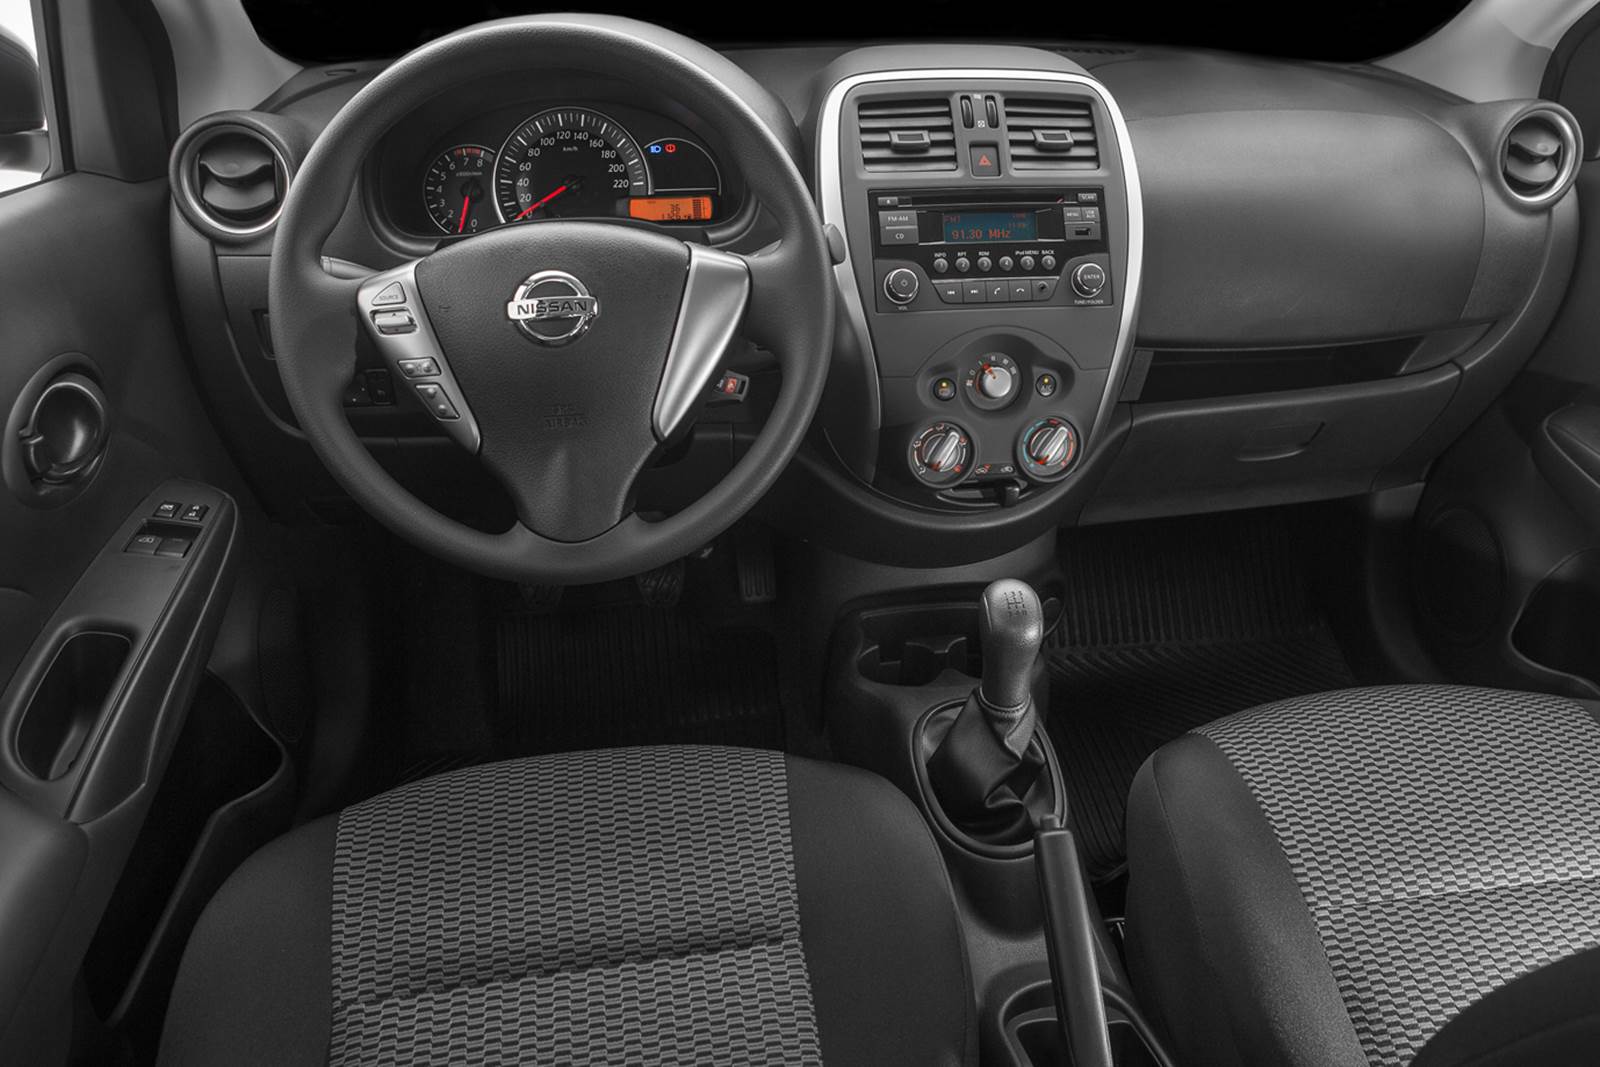 Novo Nissan Versa 2015 - interior versão S